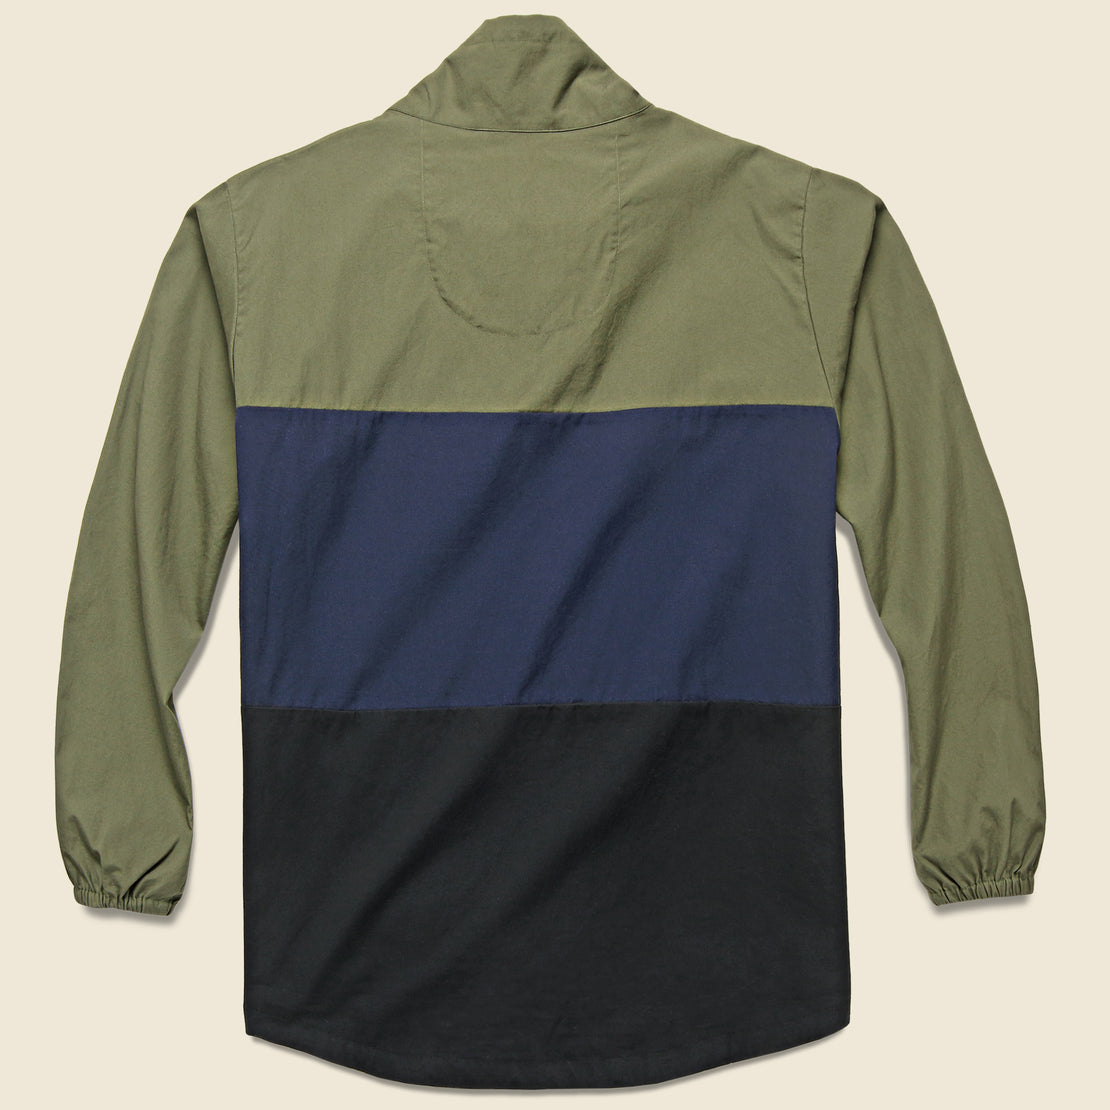 Paneled Mock Neck Pullover - Olive/Navy/Black - Monitaly - STAG Provisions - Tops - Fleece / Sweatshirt